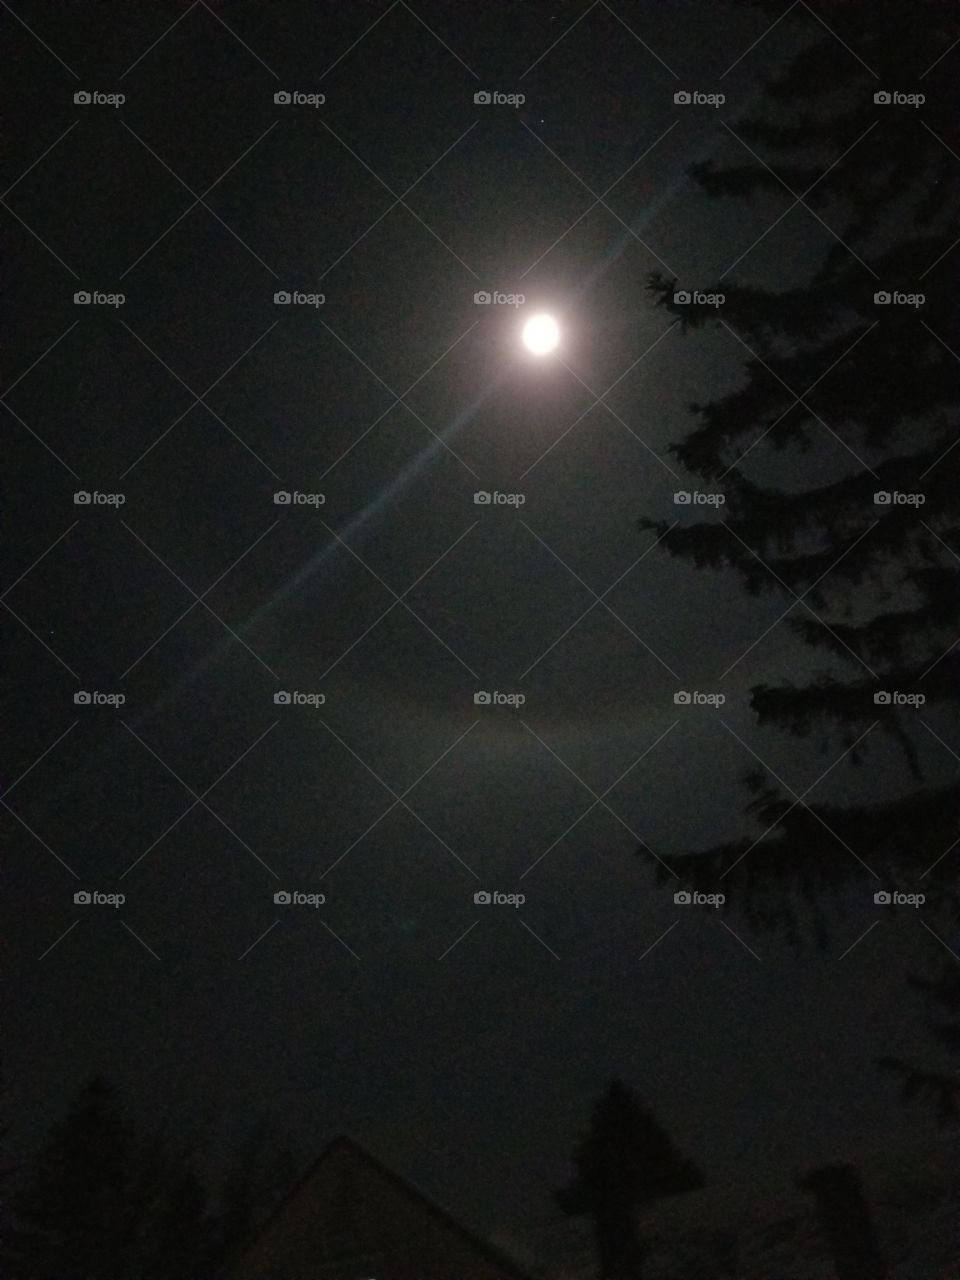 Ring around the moon at night.